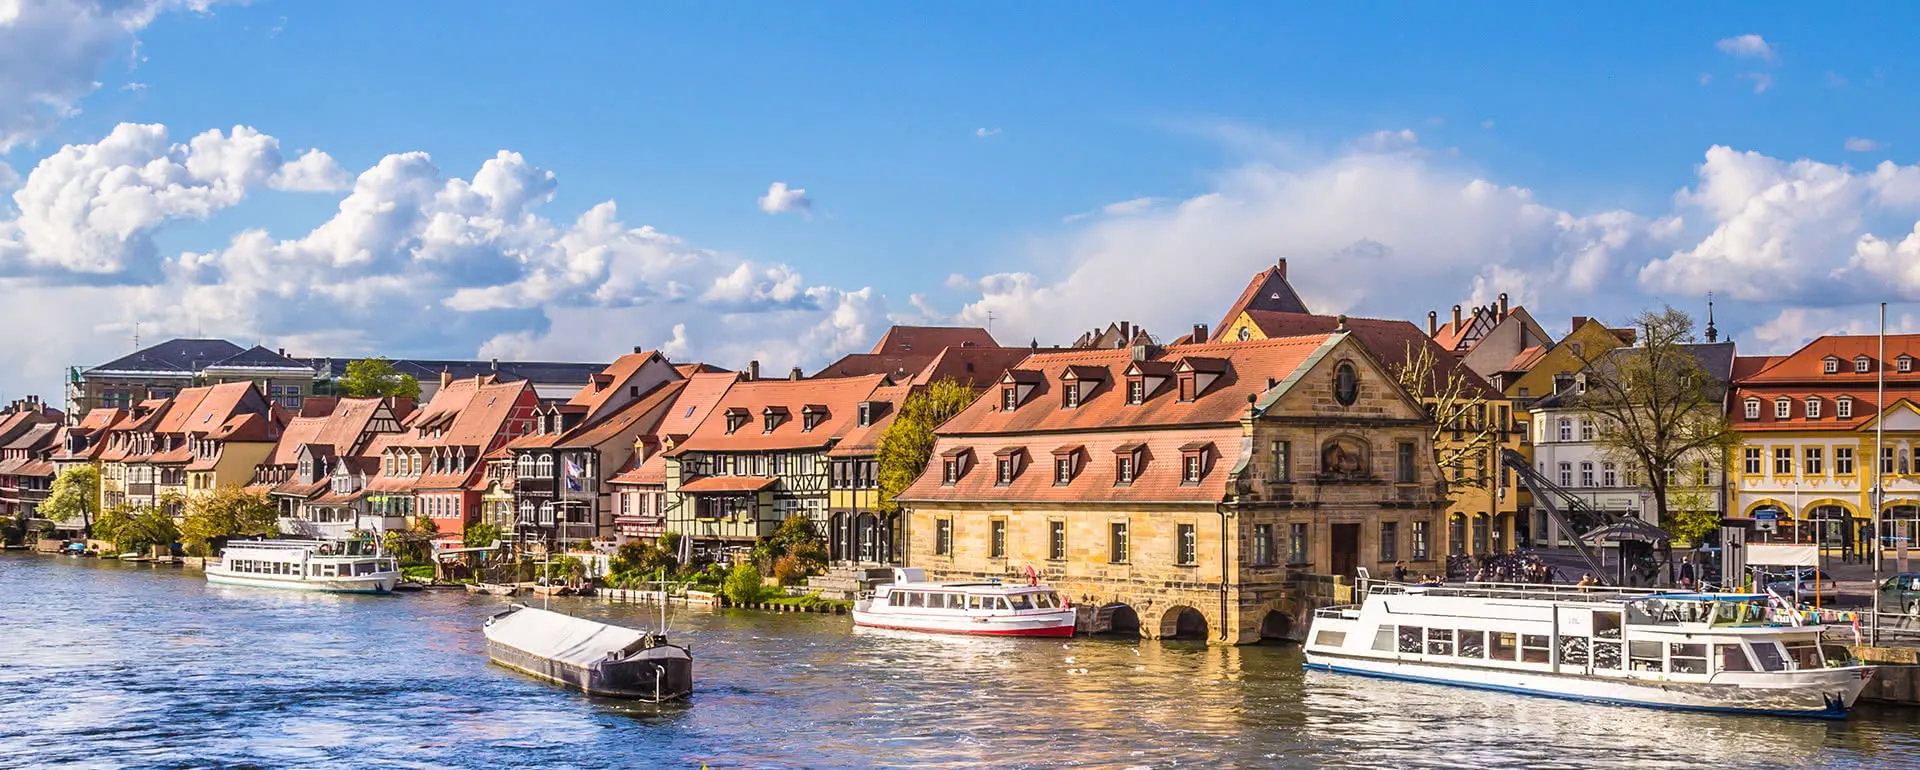 Bamberg panorama image